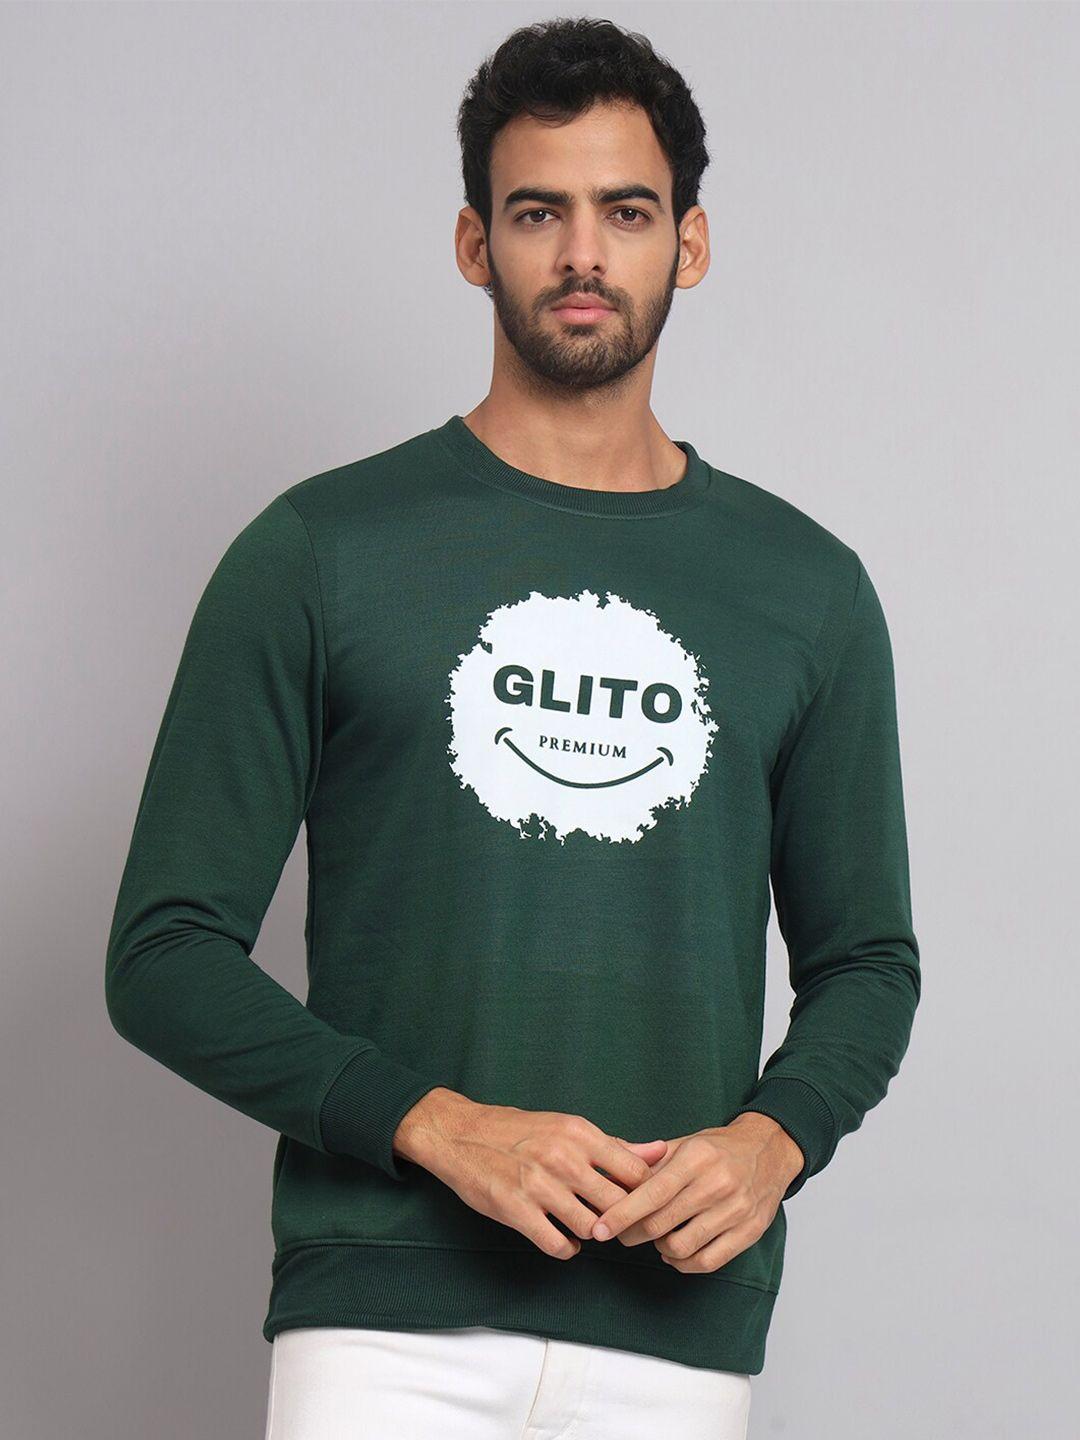 glito typography printed sweatshirt